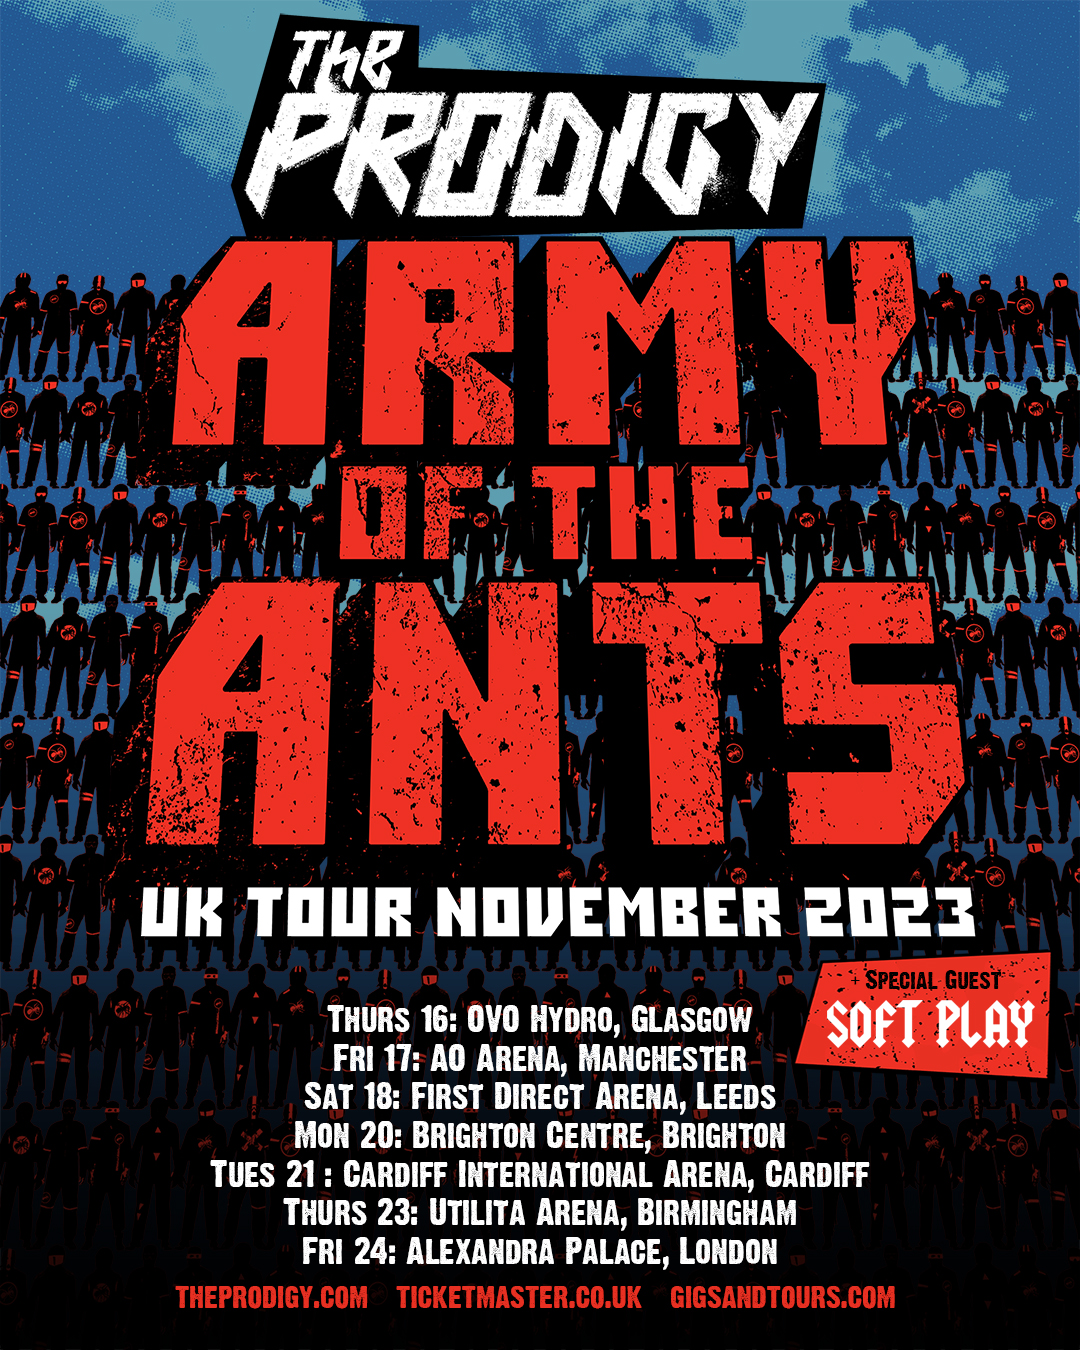 The Prodigy tour poster